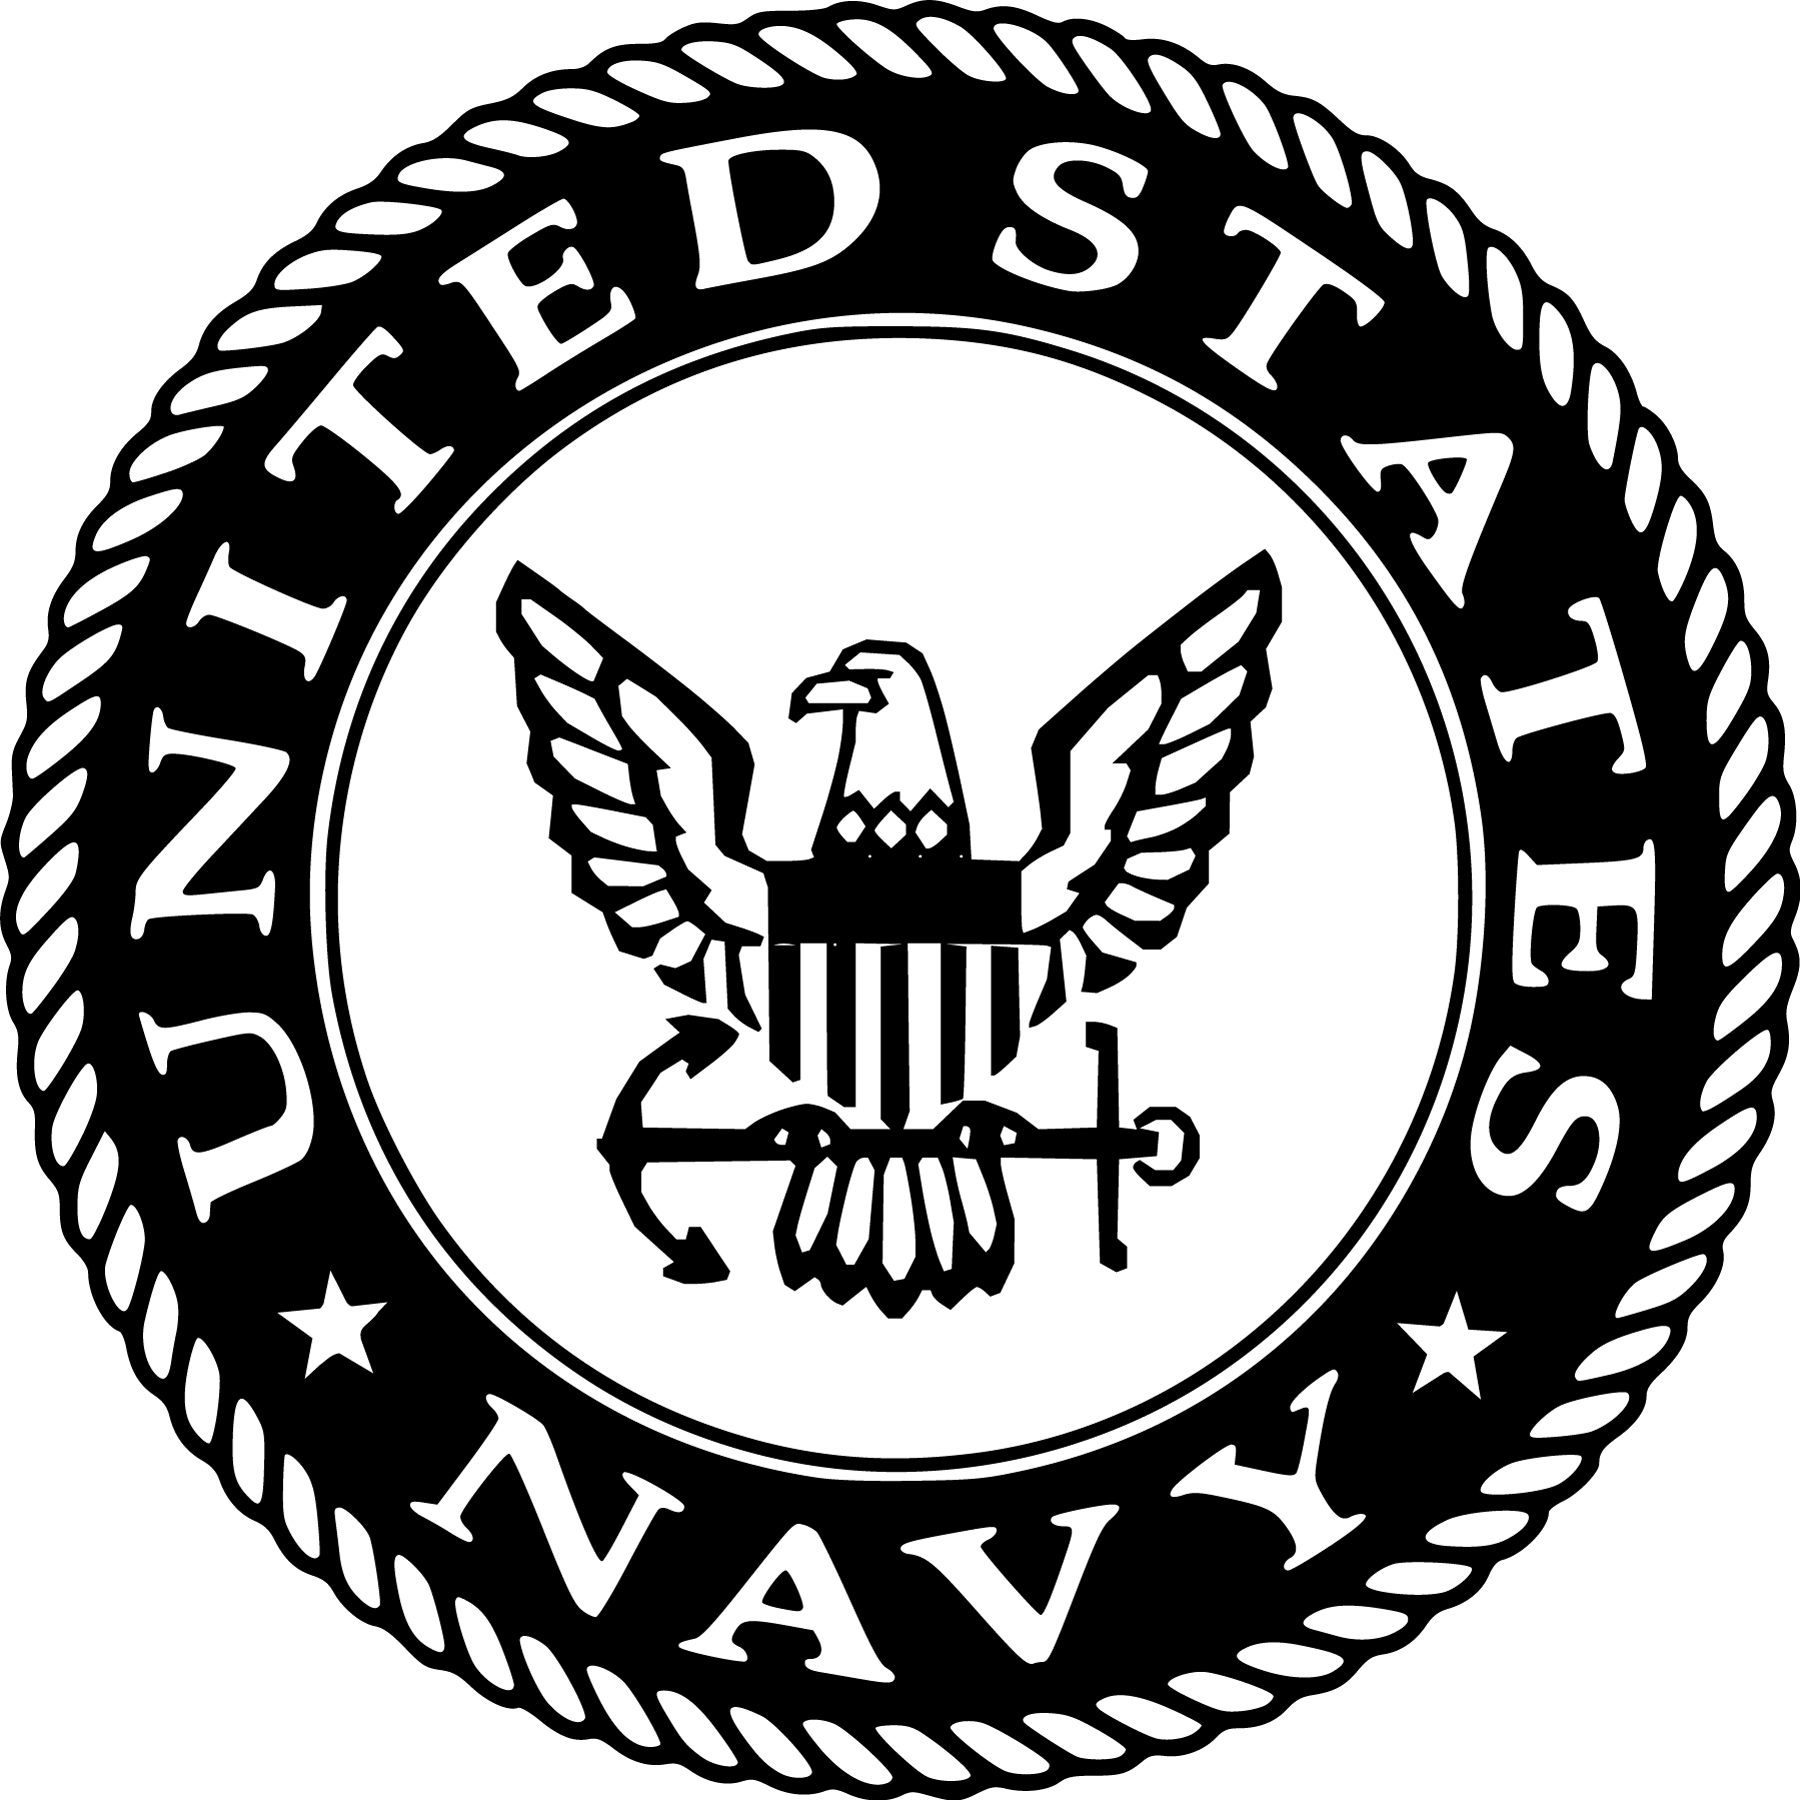 Us Navy Png - Navy Logo 102.png (1800×1800), Transparent background PNG HD thumbnail